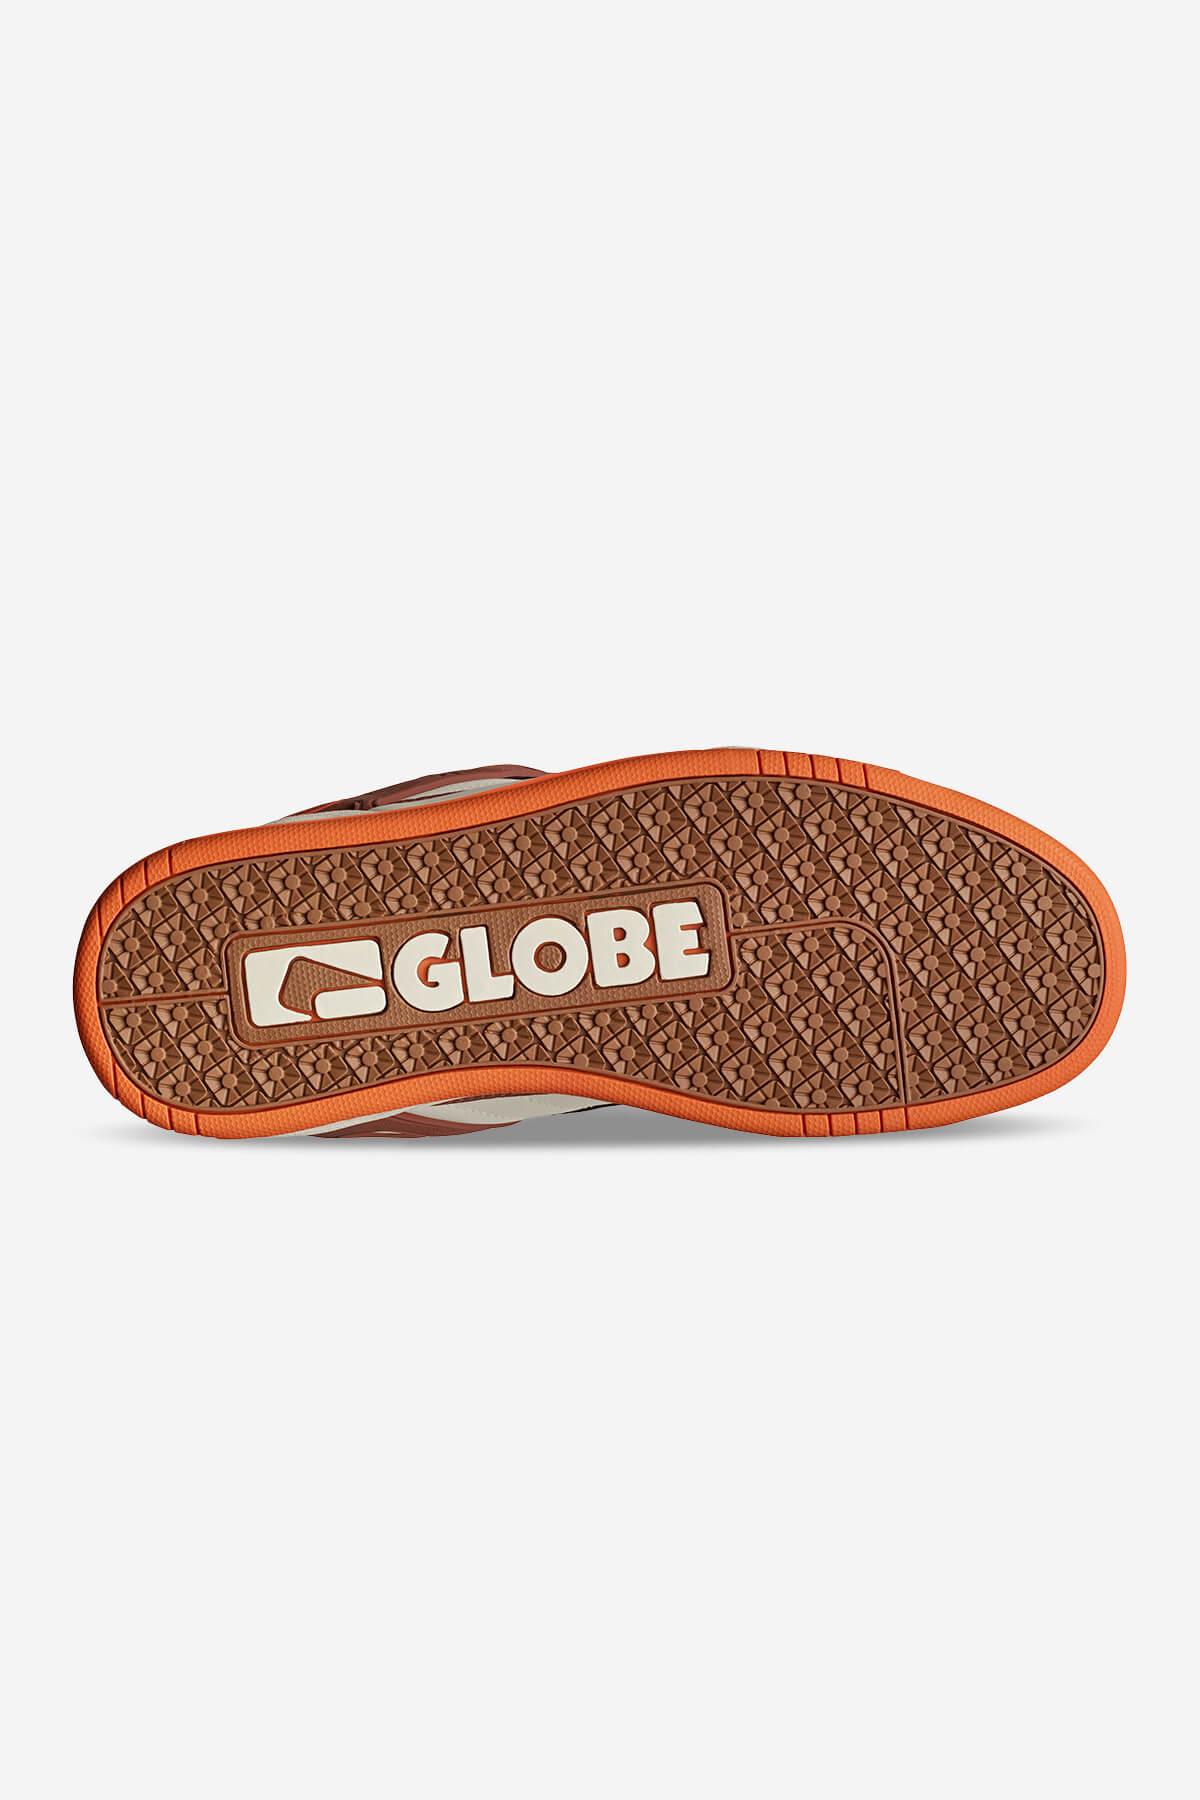 Globe - Tilt - Antique/Mocha - Skate Shoes